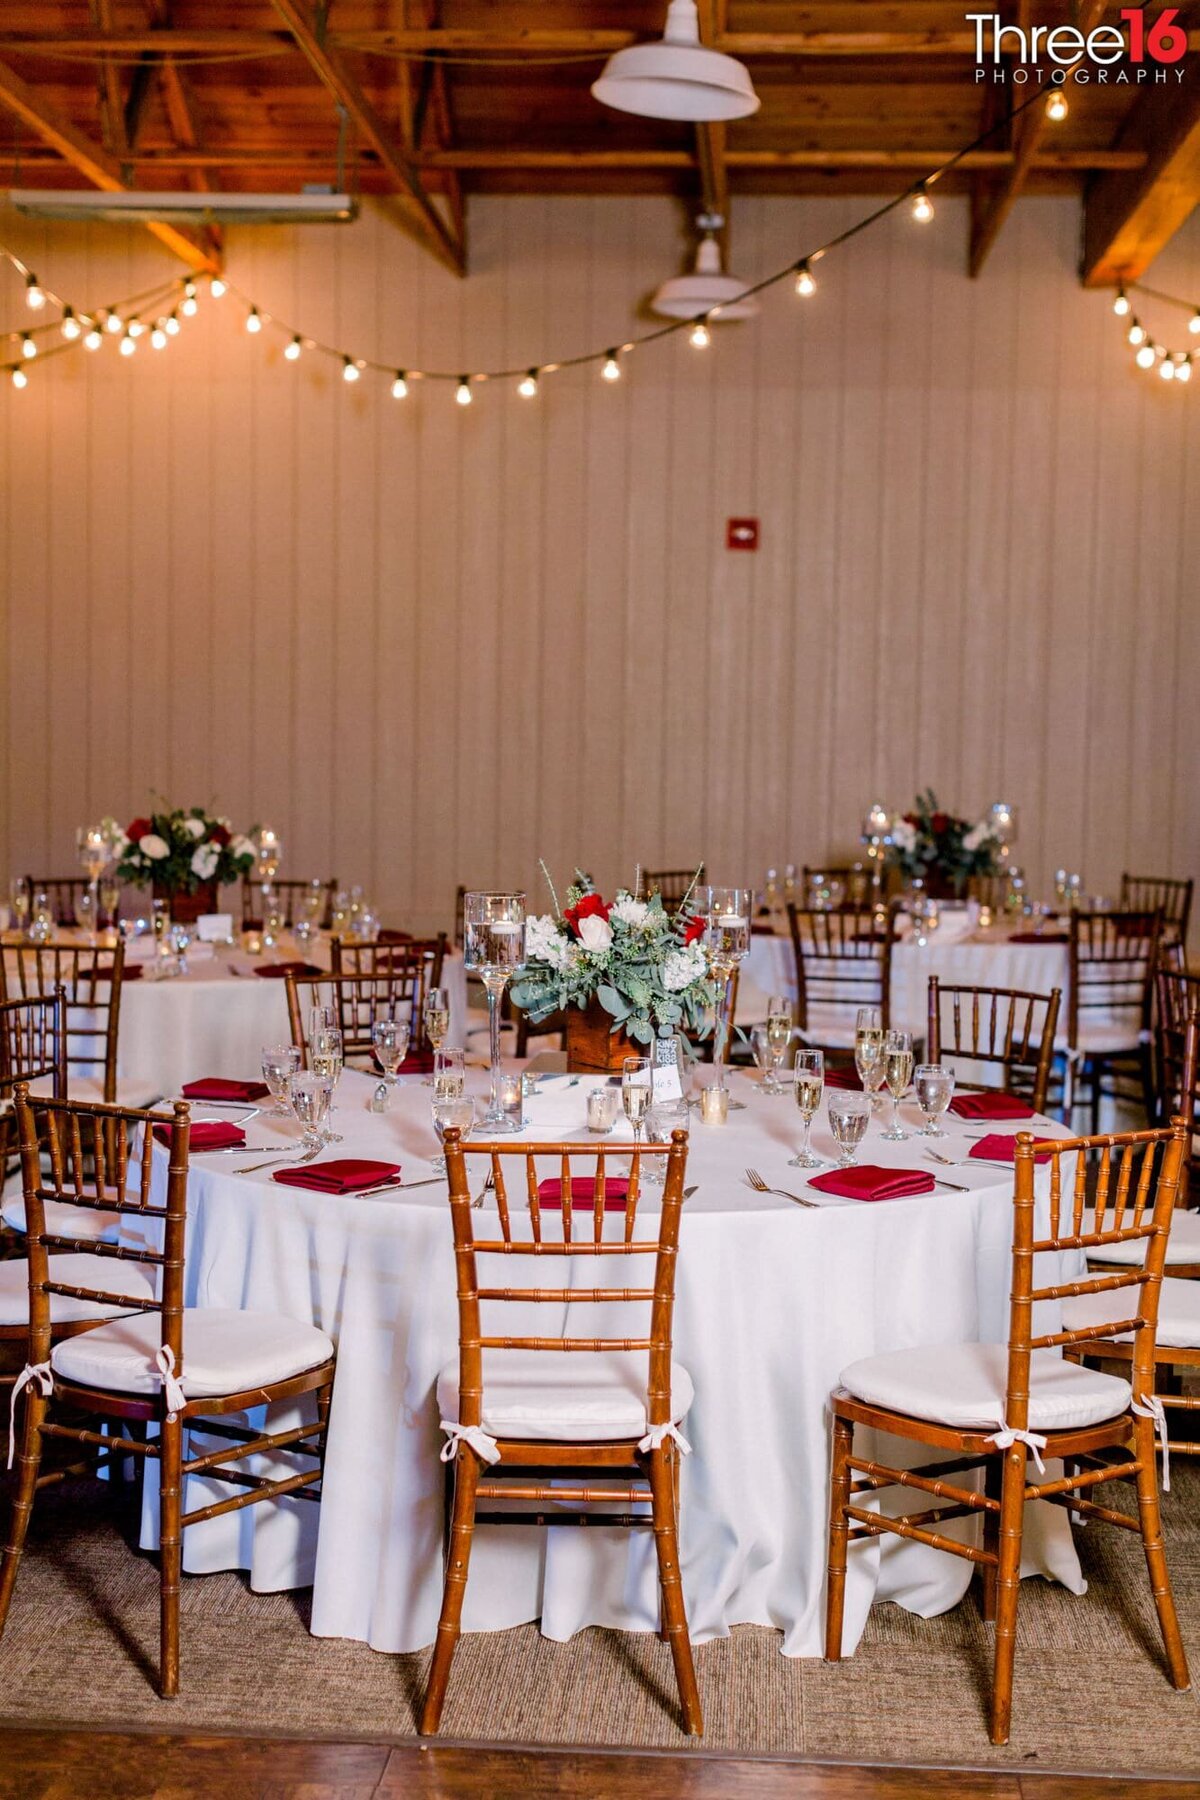 Table setup for wedding reception at Strawberry Farms Golf Club